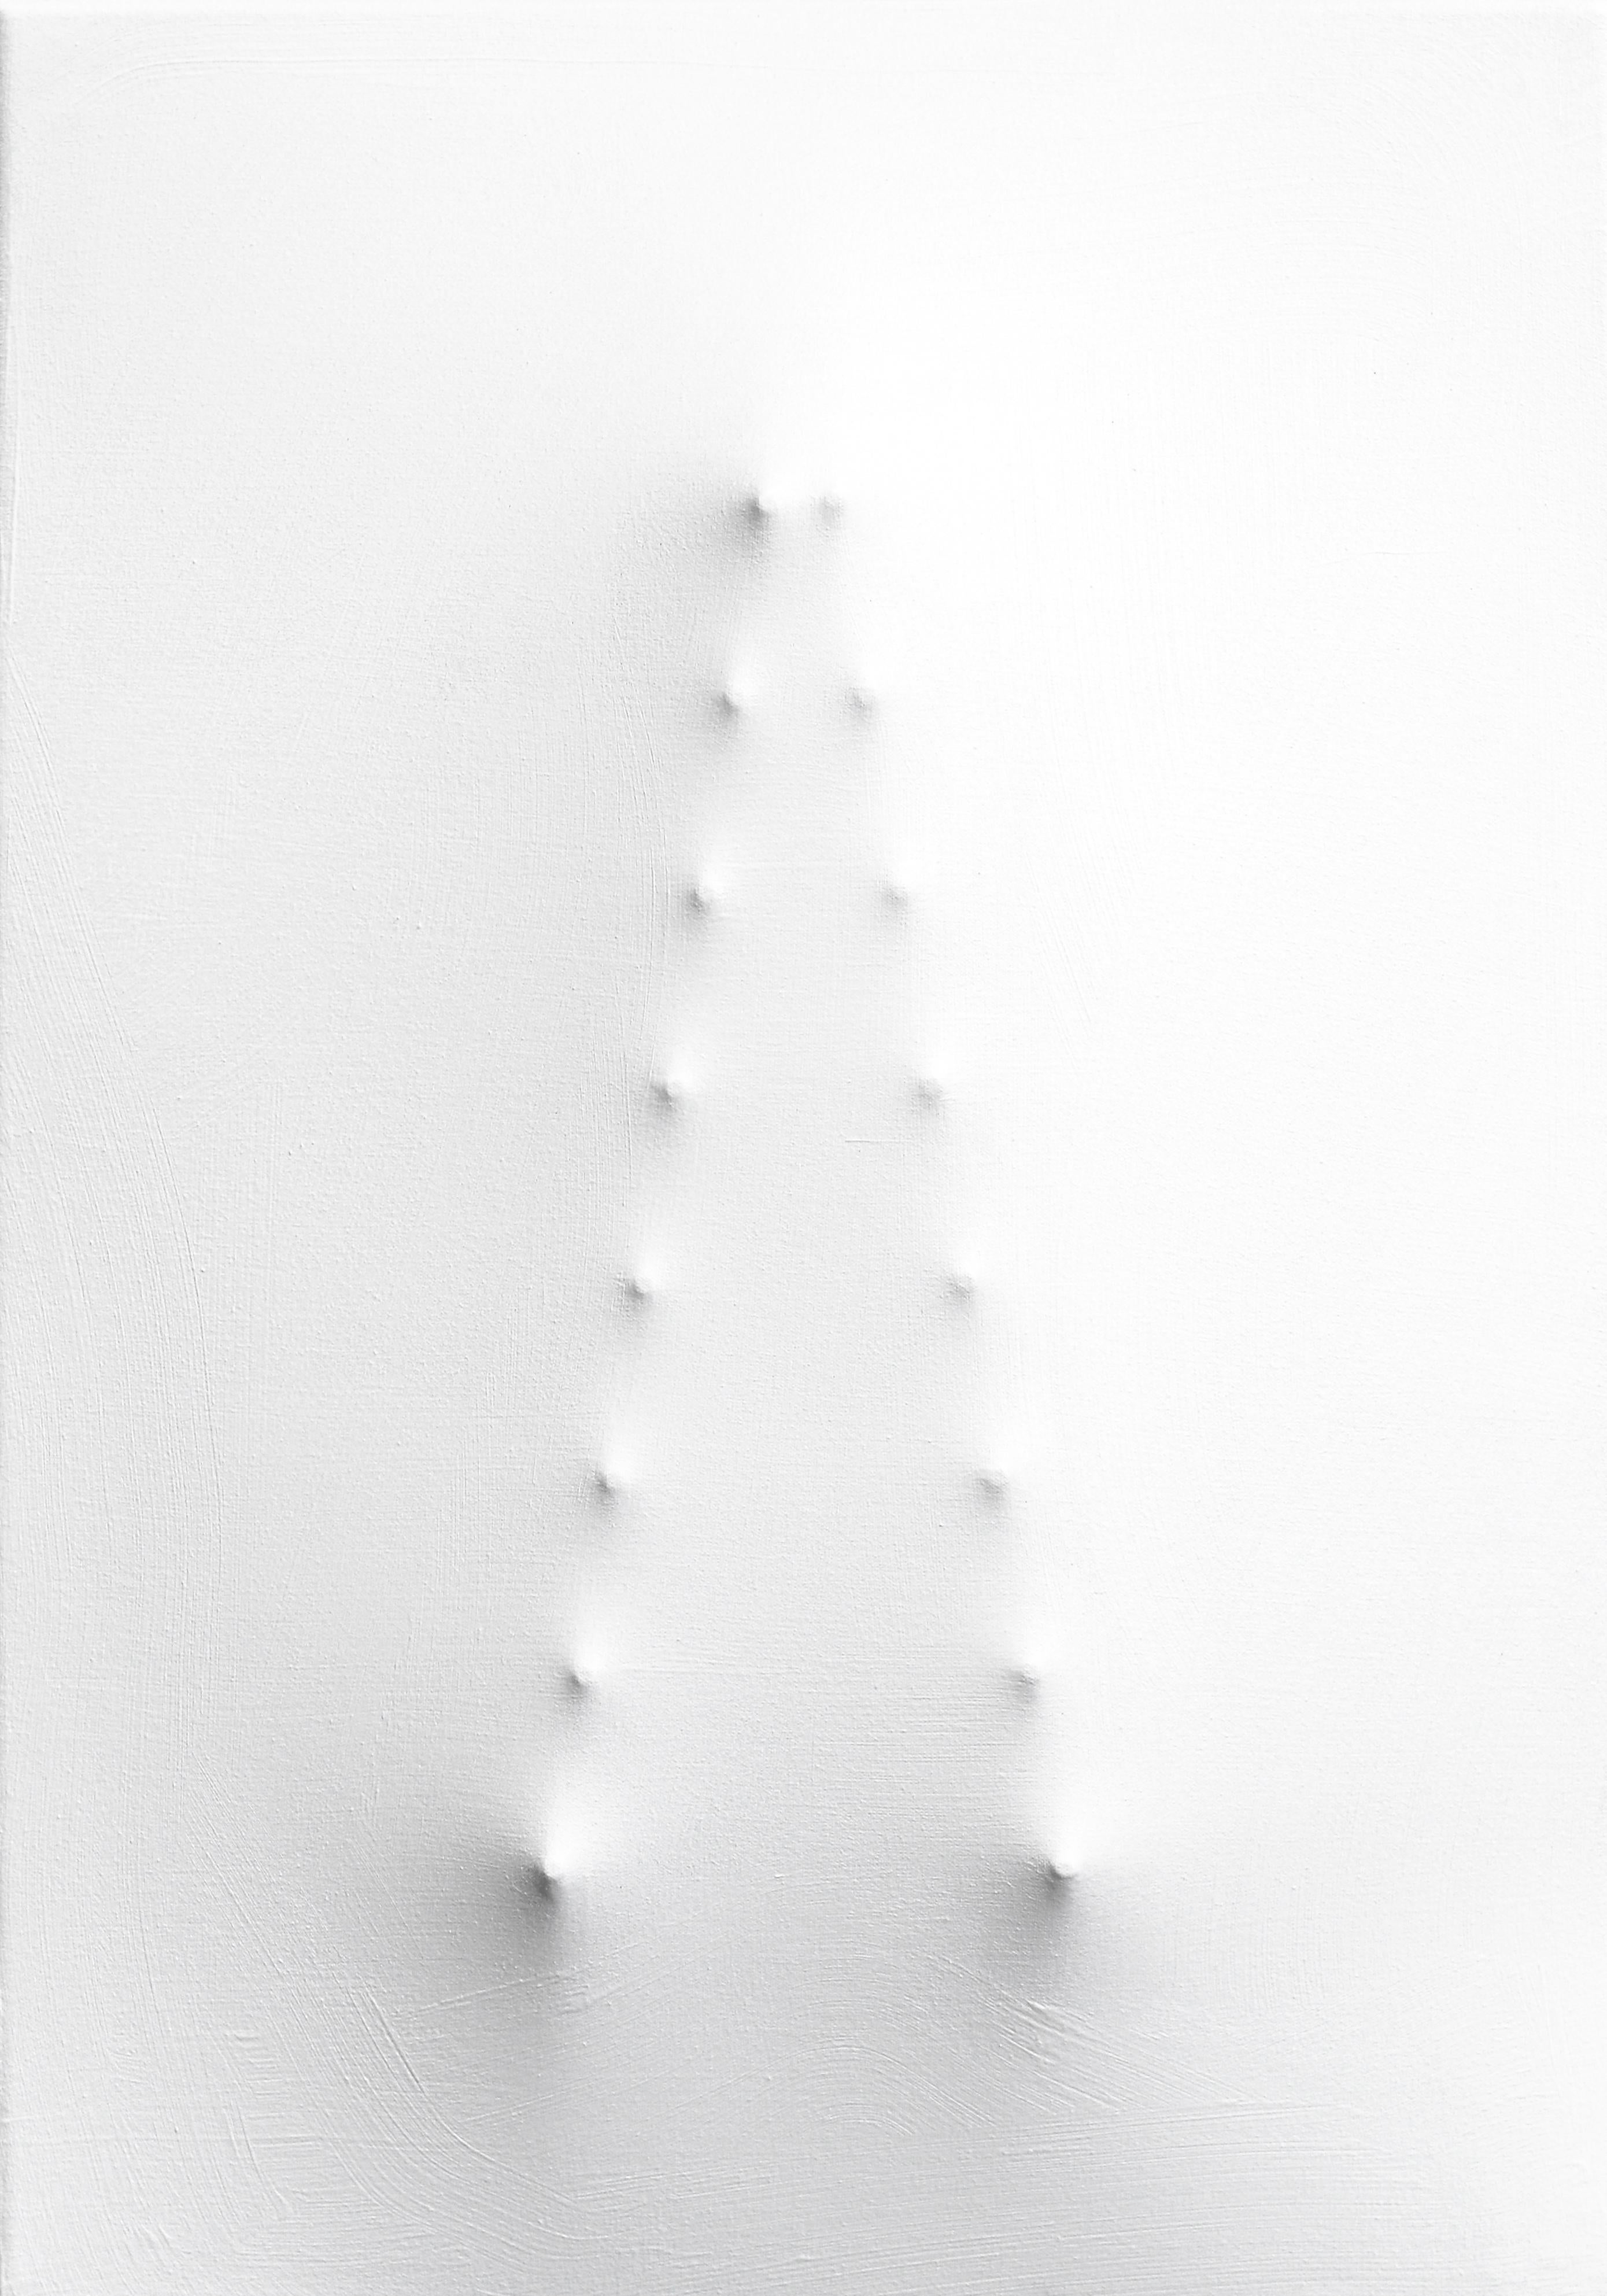 Ritual-Objekt Pause – Original Abstraktes minimalistisches skulpturales Kunstwerk